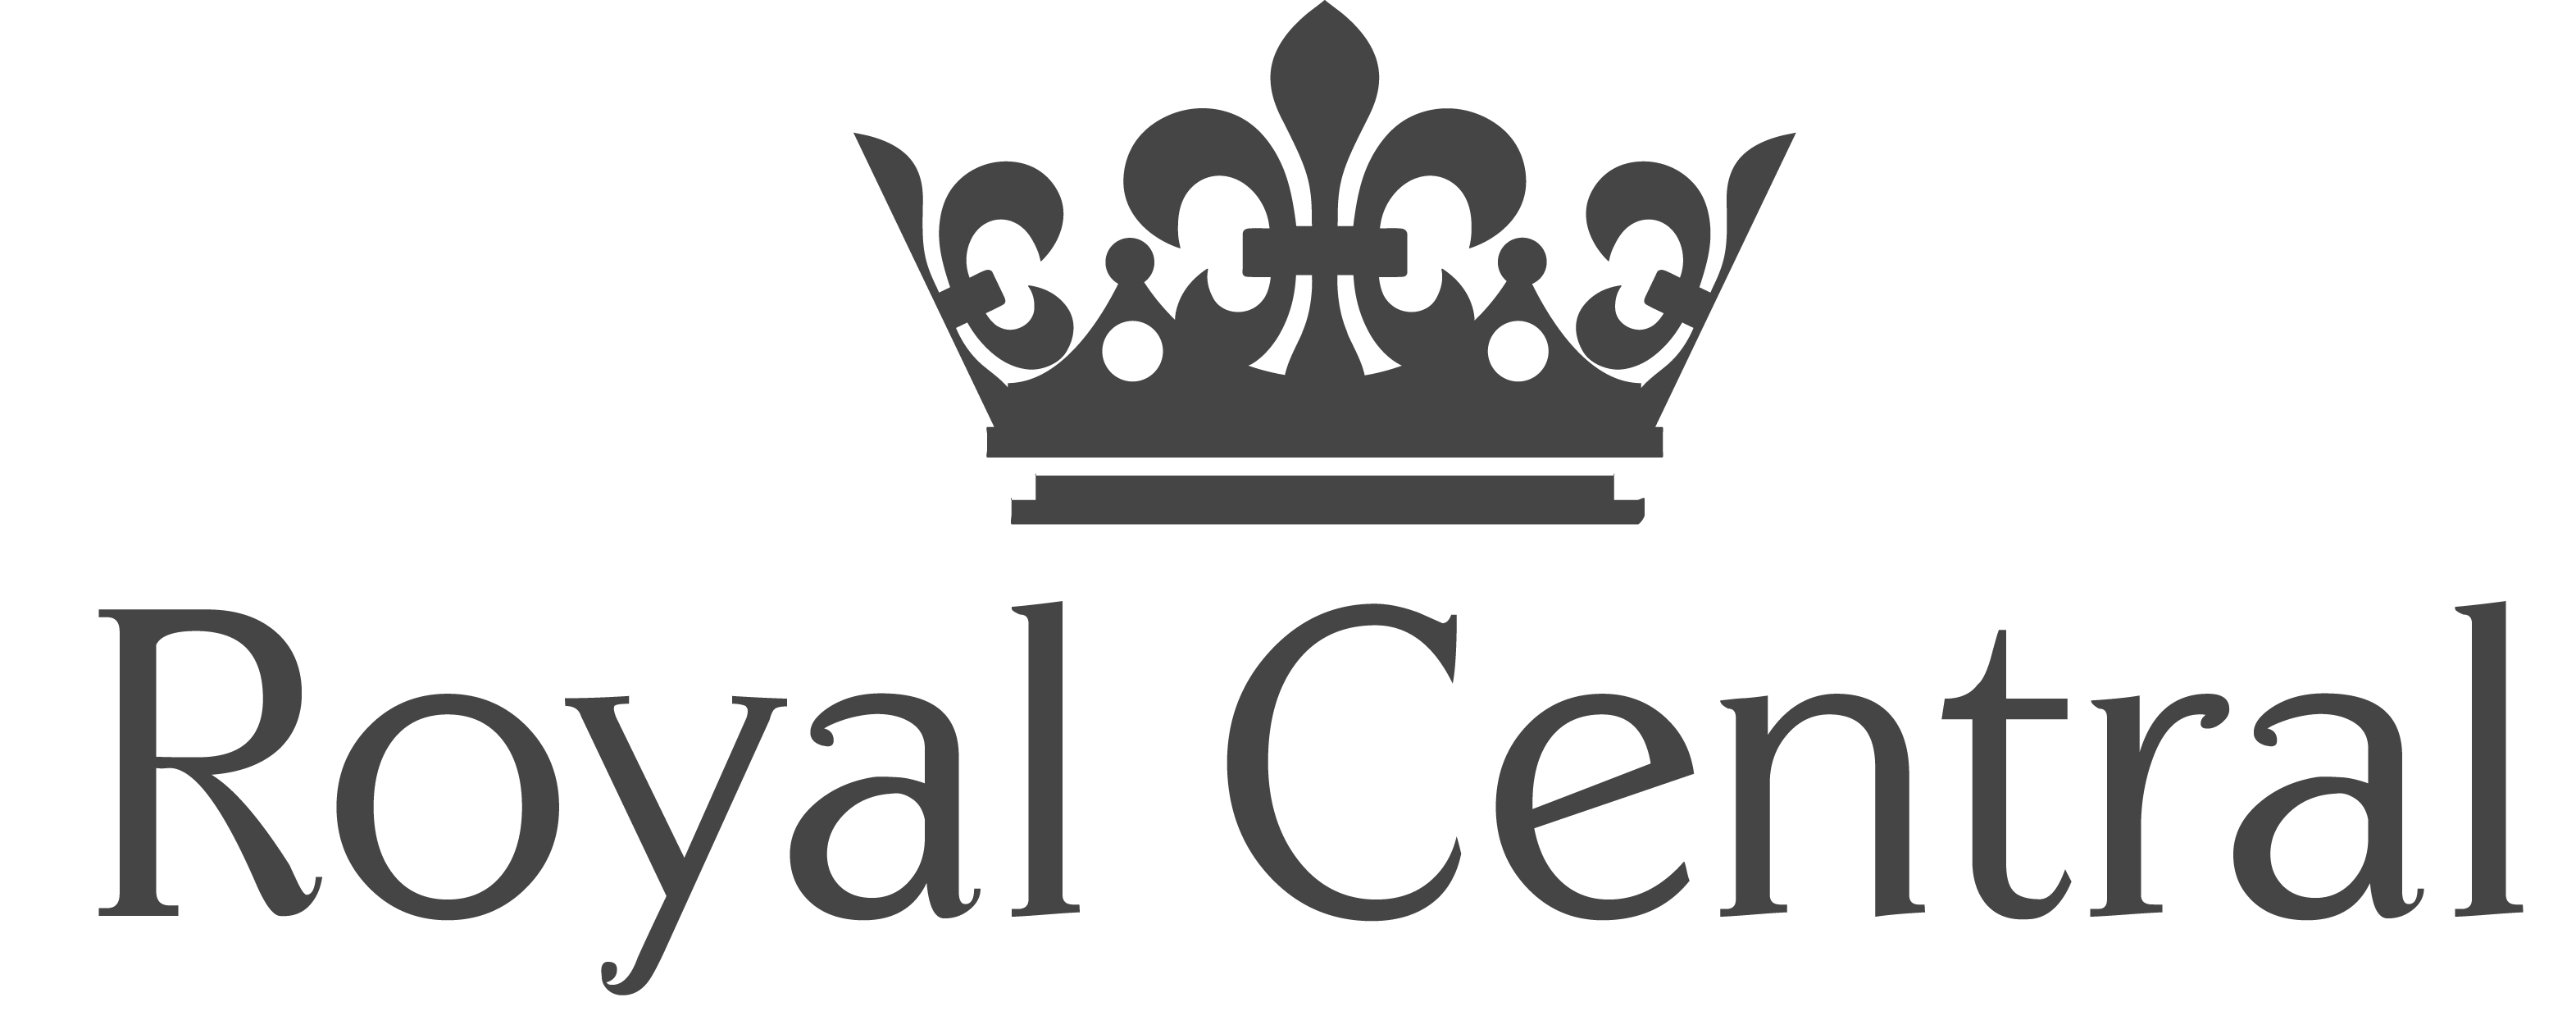 All Royals Logo - Kansas city royals crown logo graphic royalty free stock - RR ...